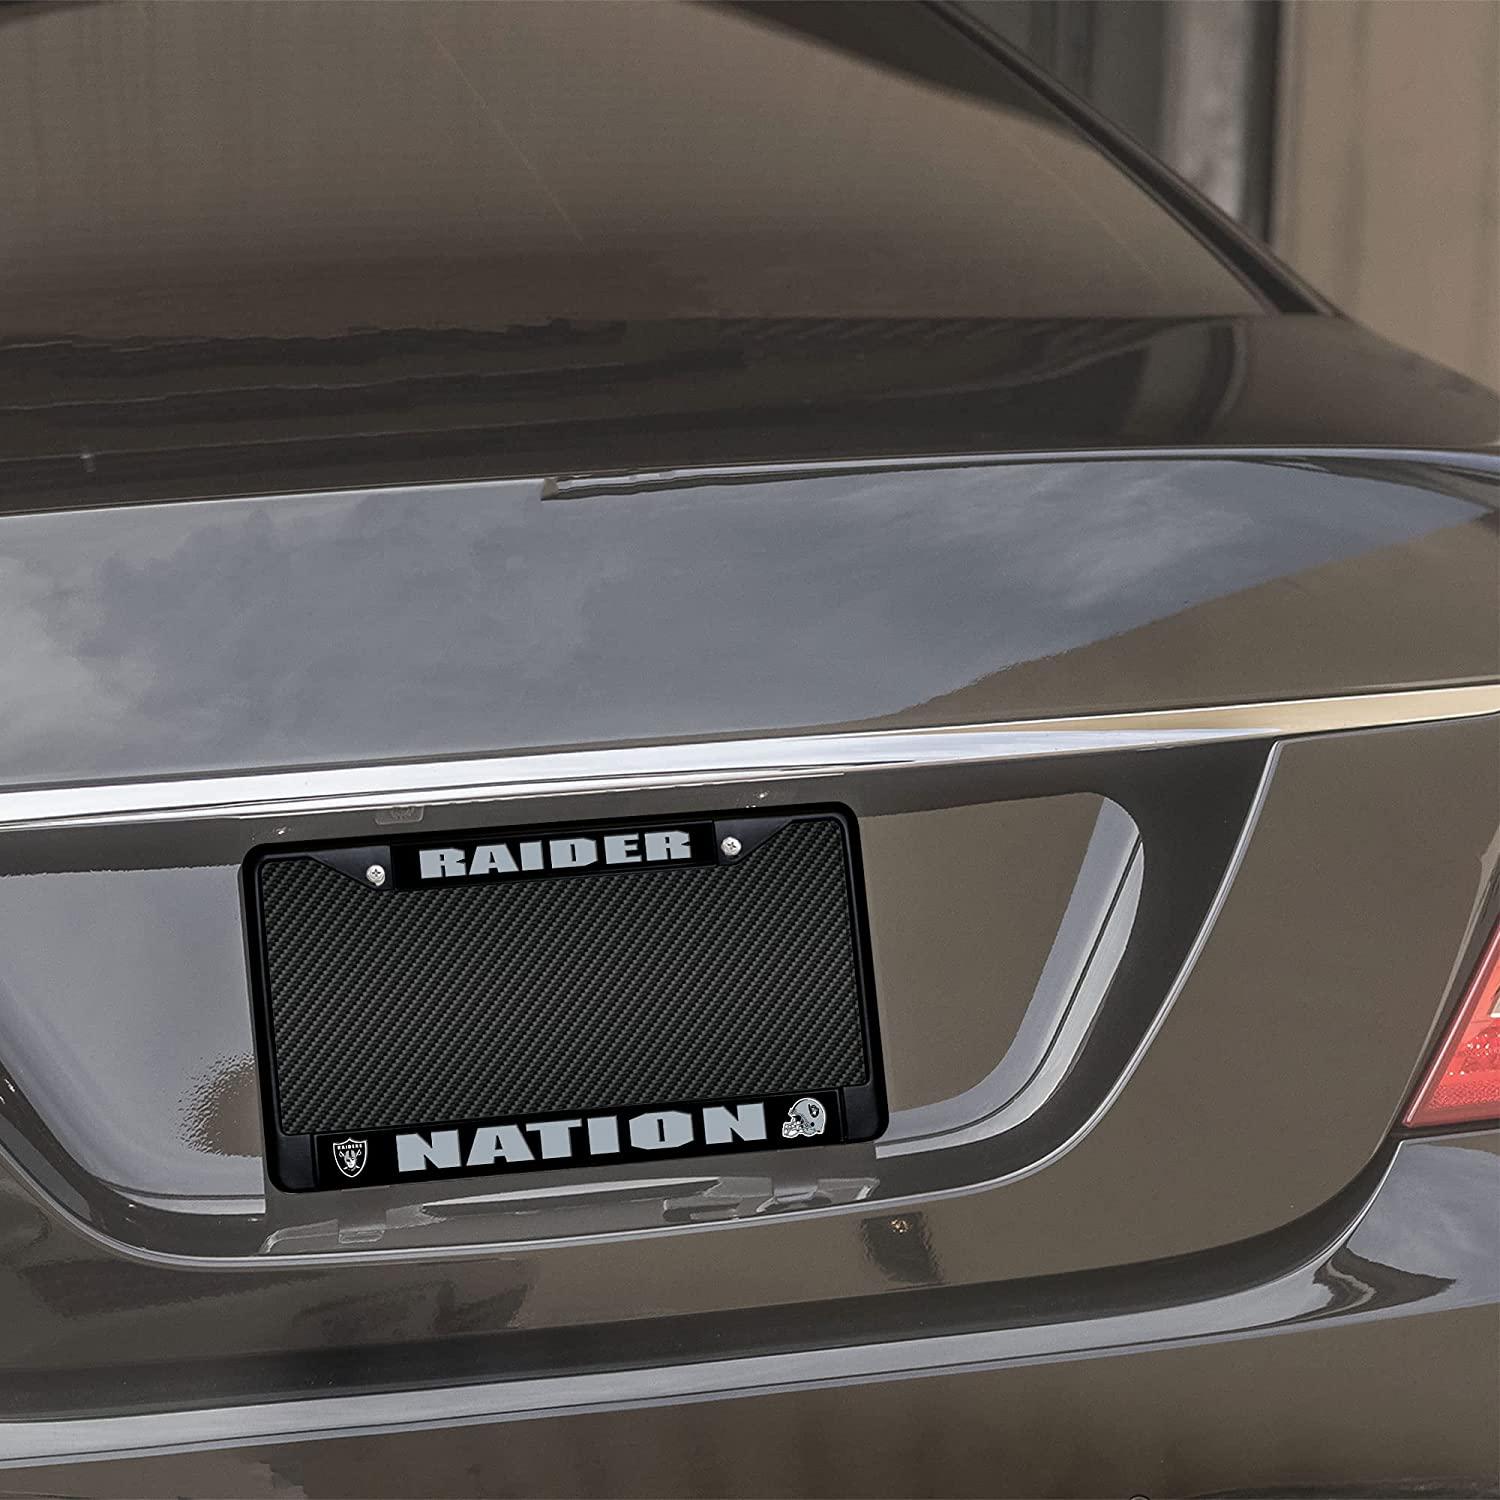 NFL Las Vegas Raiders Football Chrome License Plate Frame Fan Mats 15035 -  California Car Cover Co.